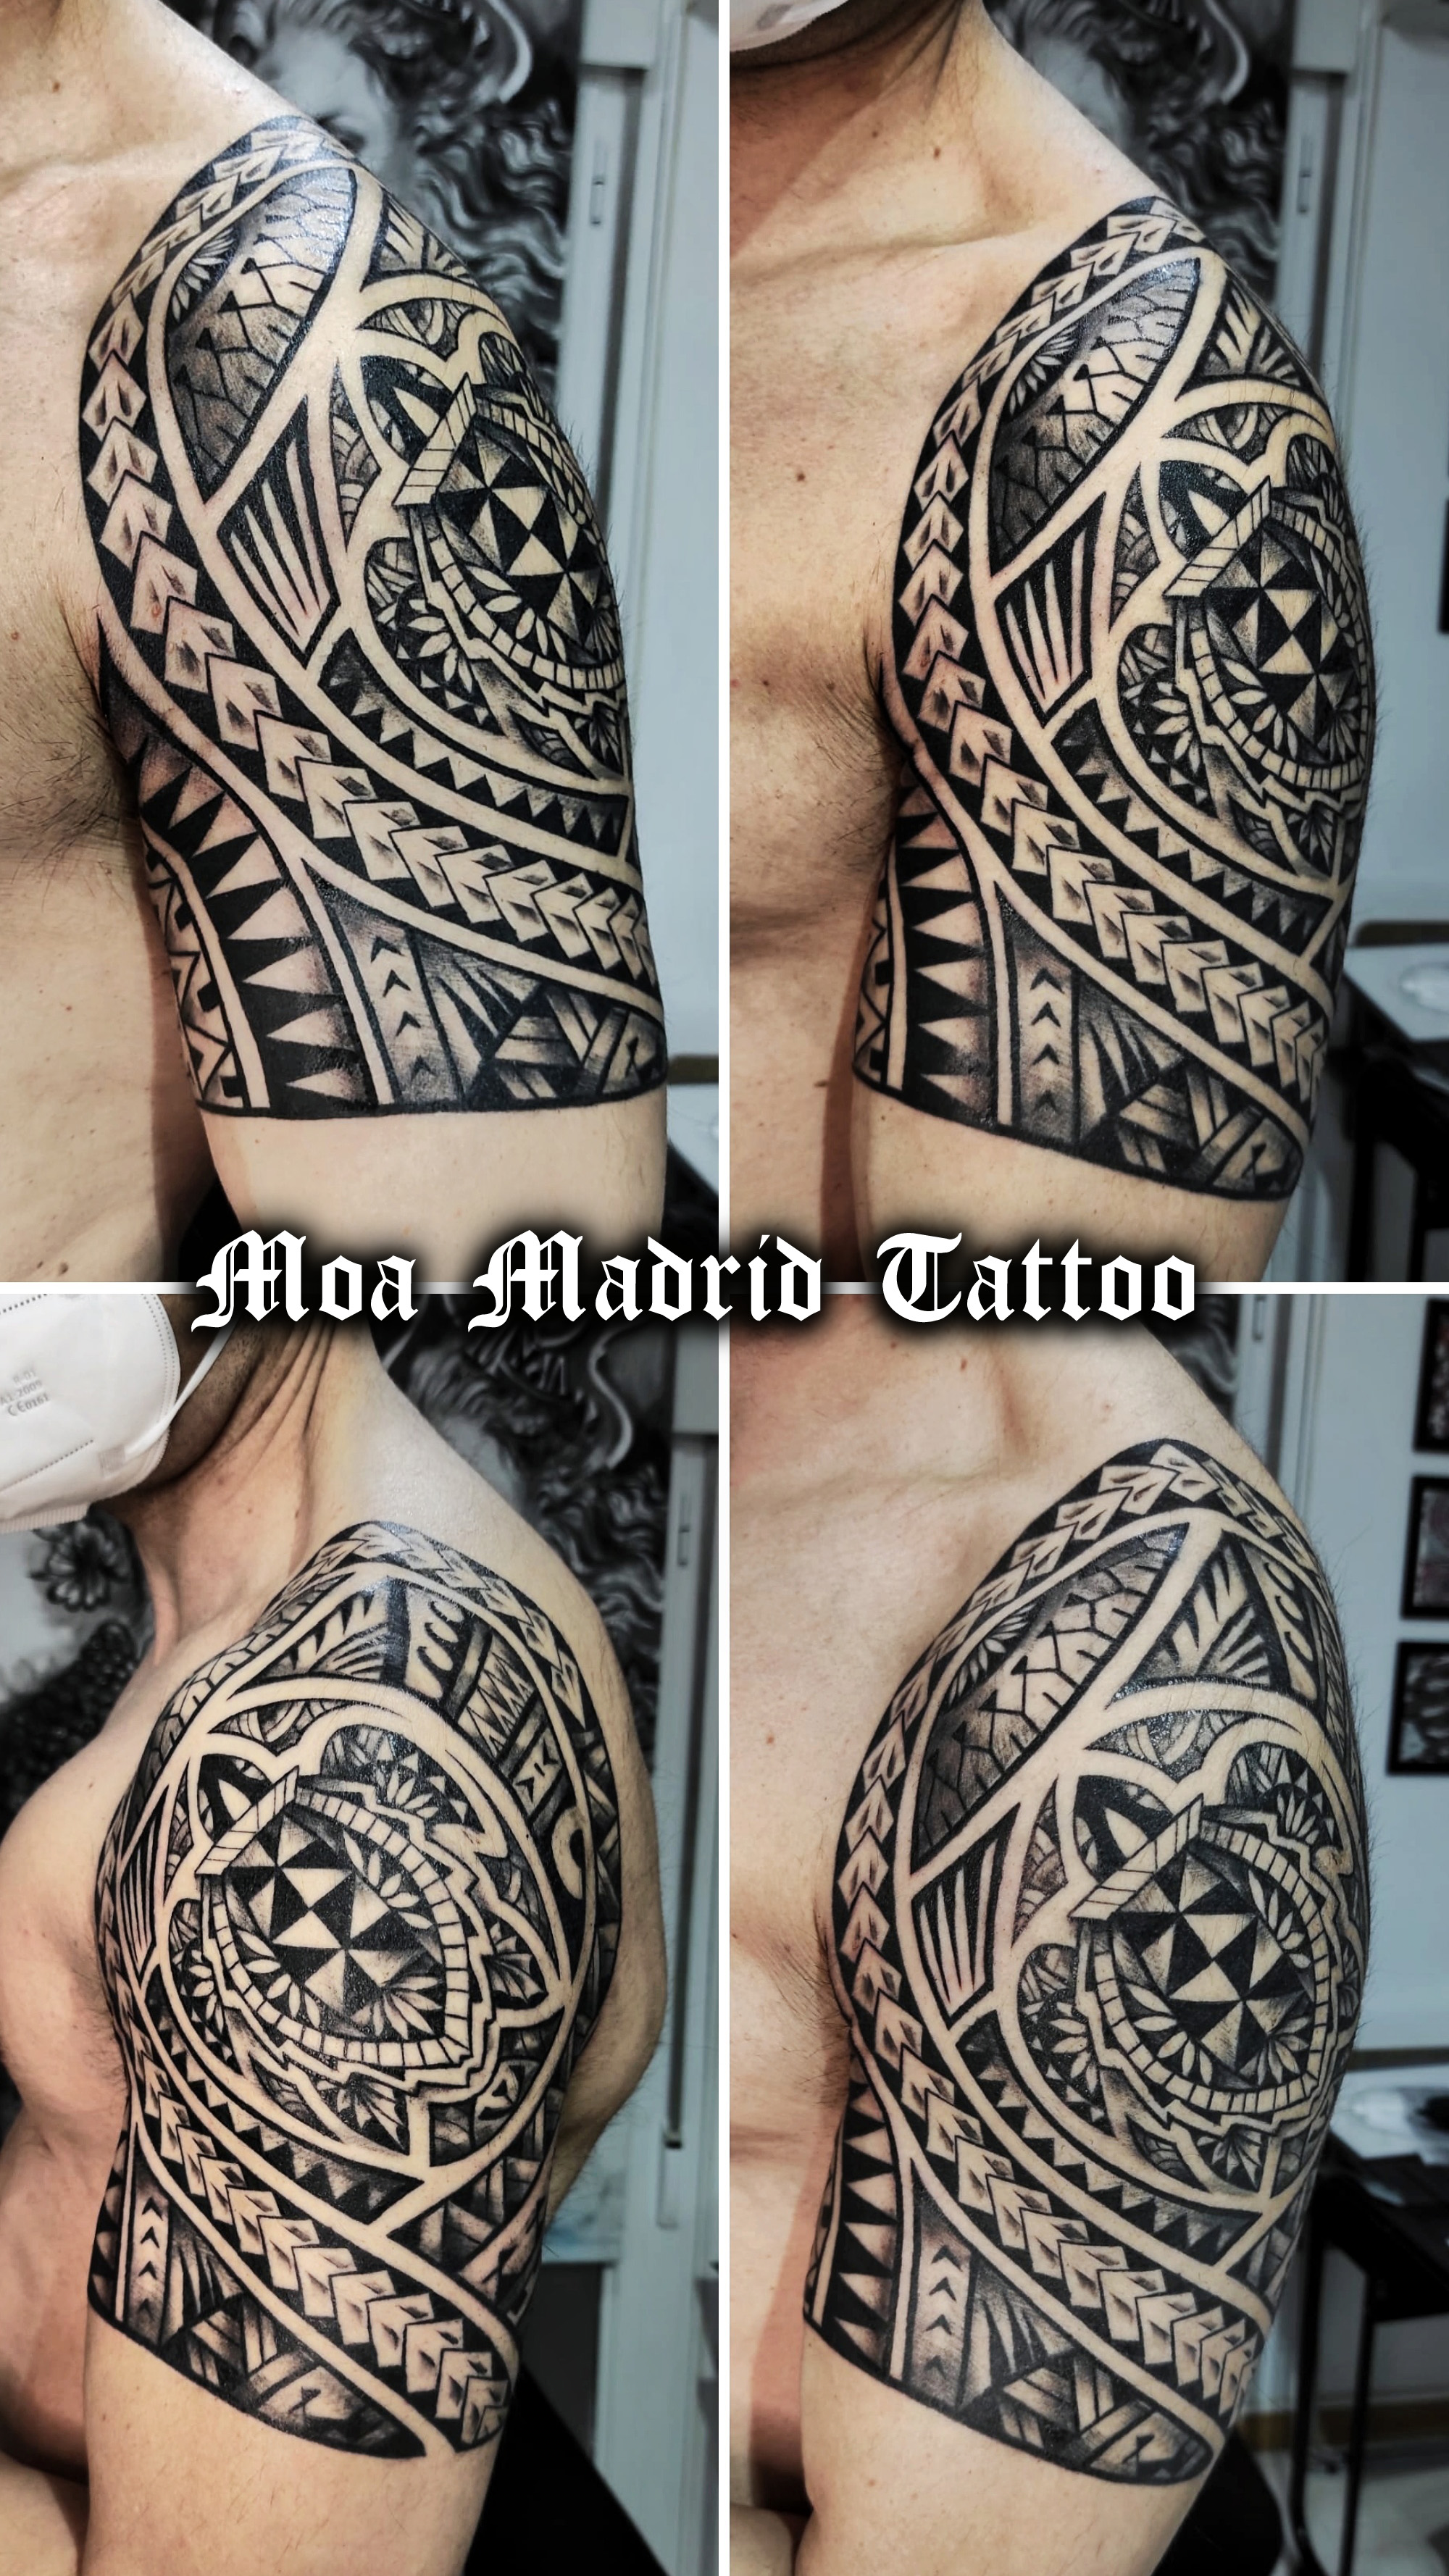 7007_56312_tatuaje_maori_con_tortuga_en_brazo_y_hombro_en_madrid